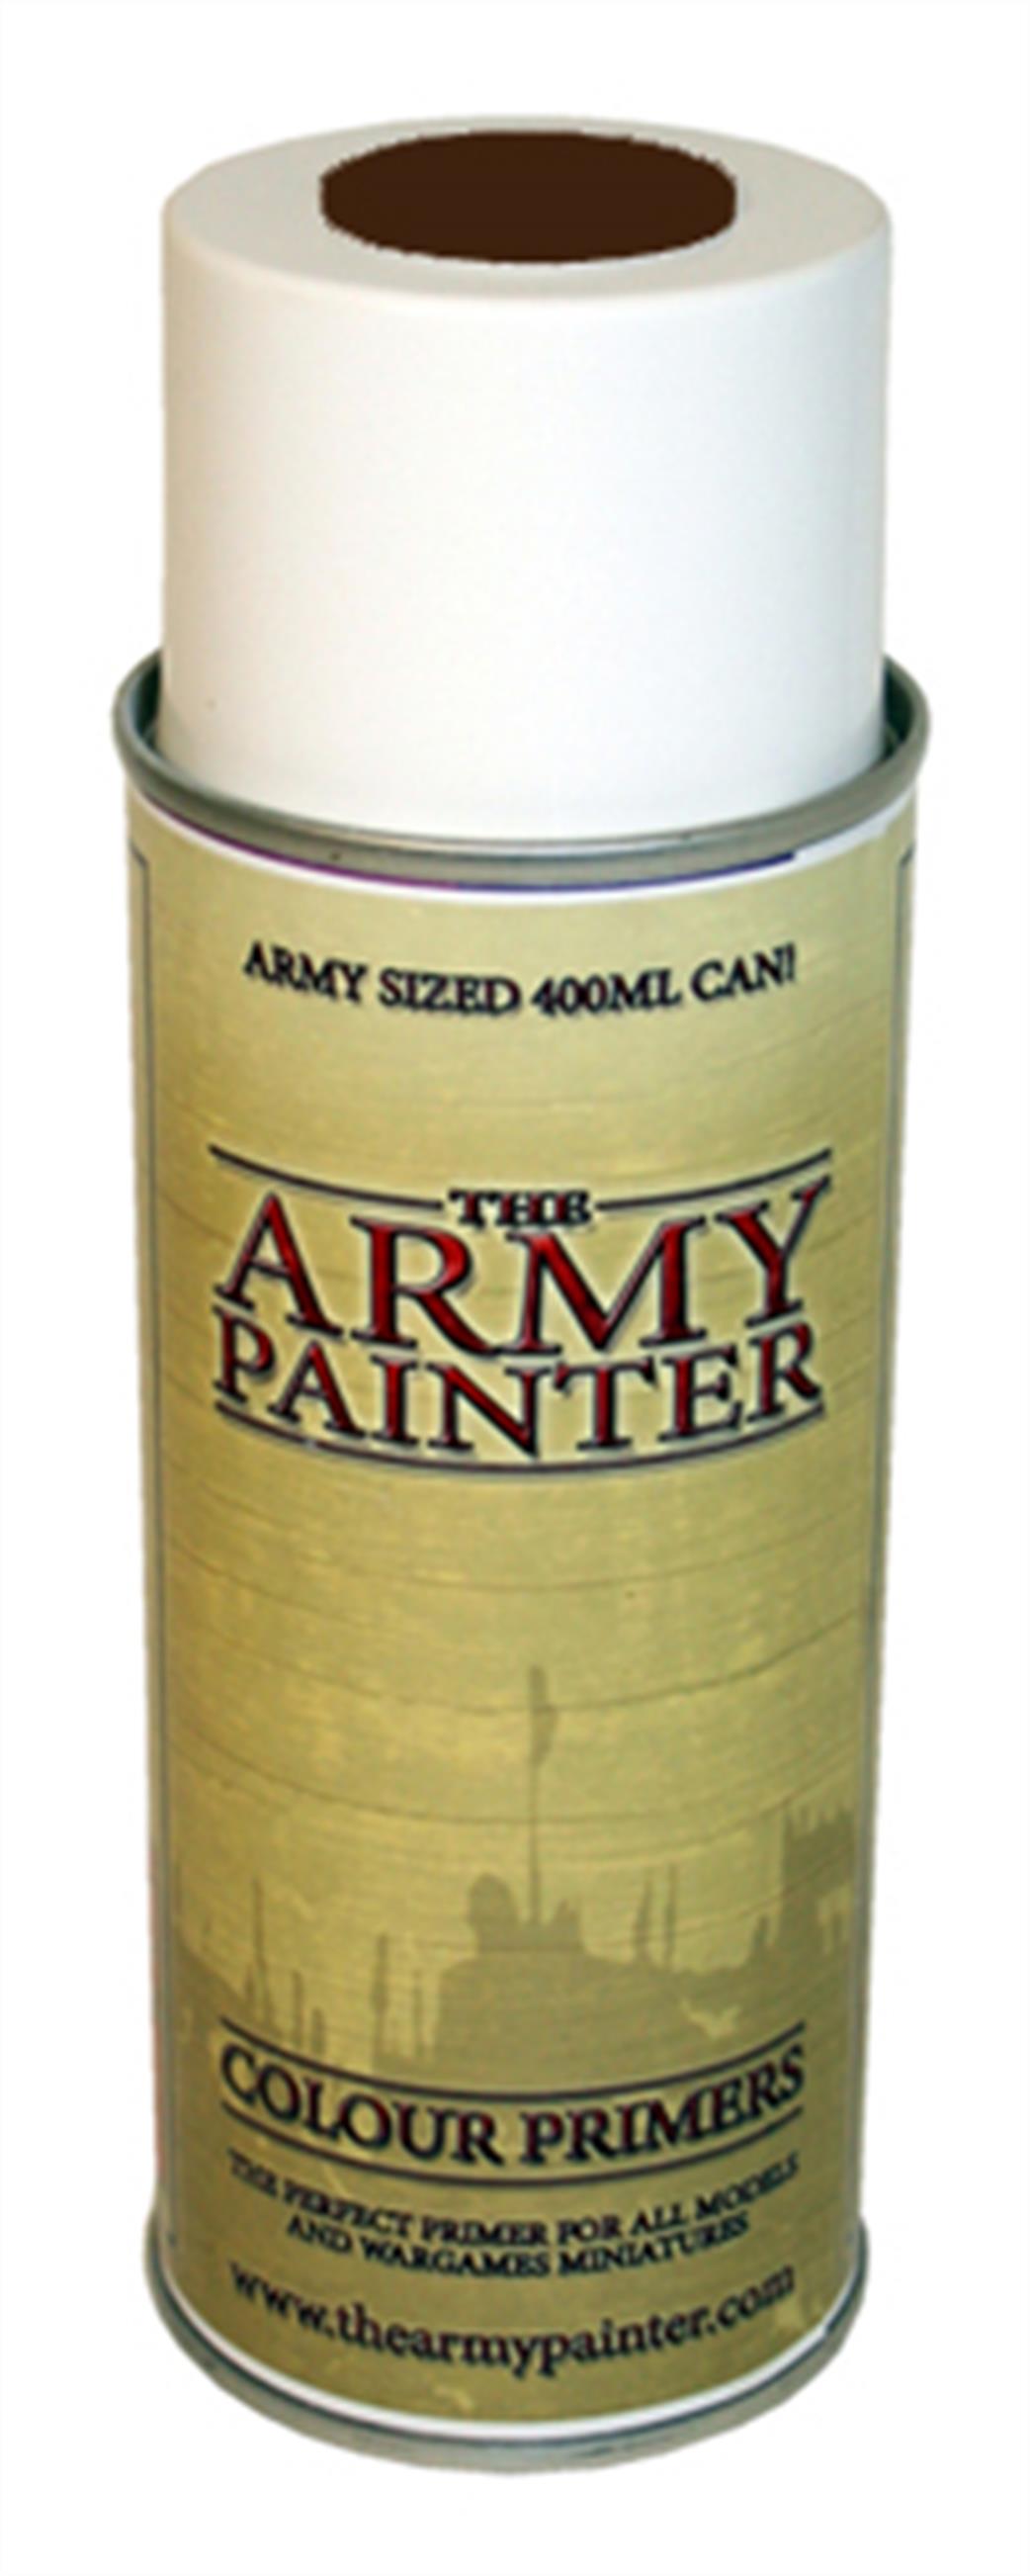 Army Painter 3016 Fur Brown Colour Primer Spray 400ml